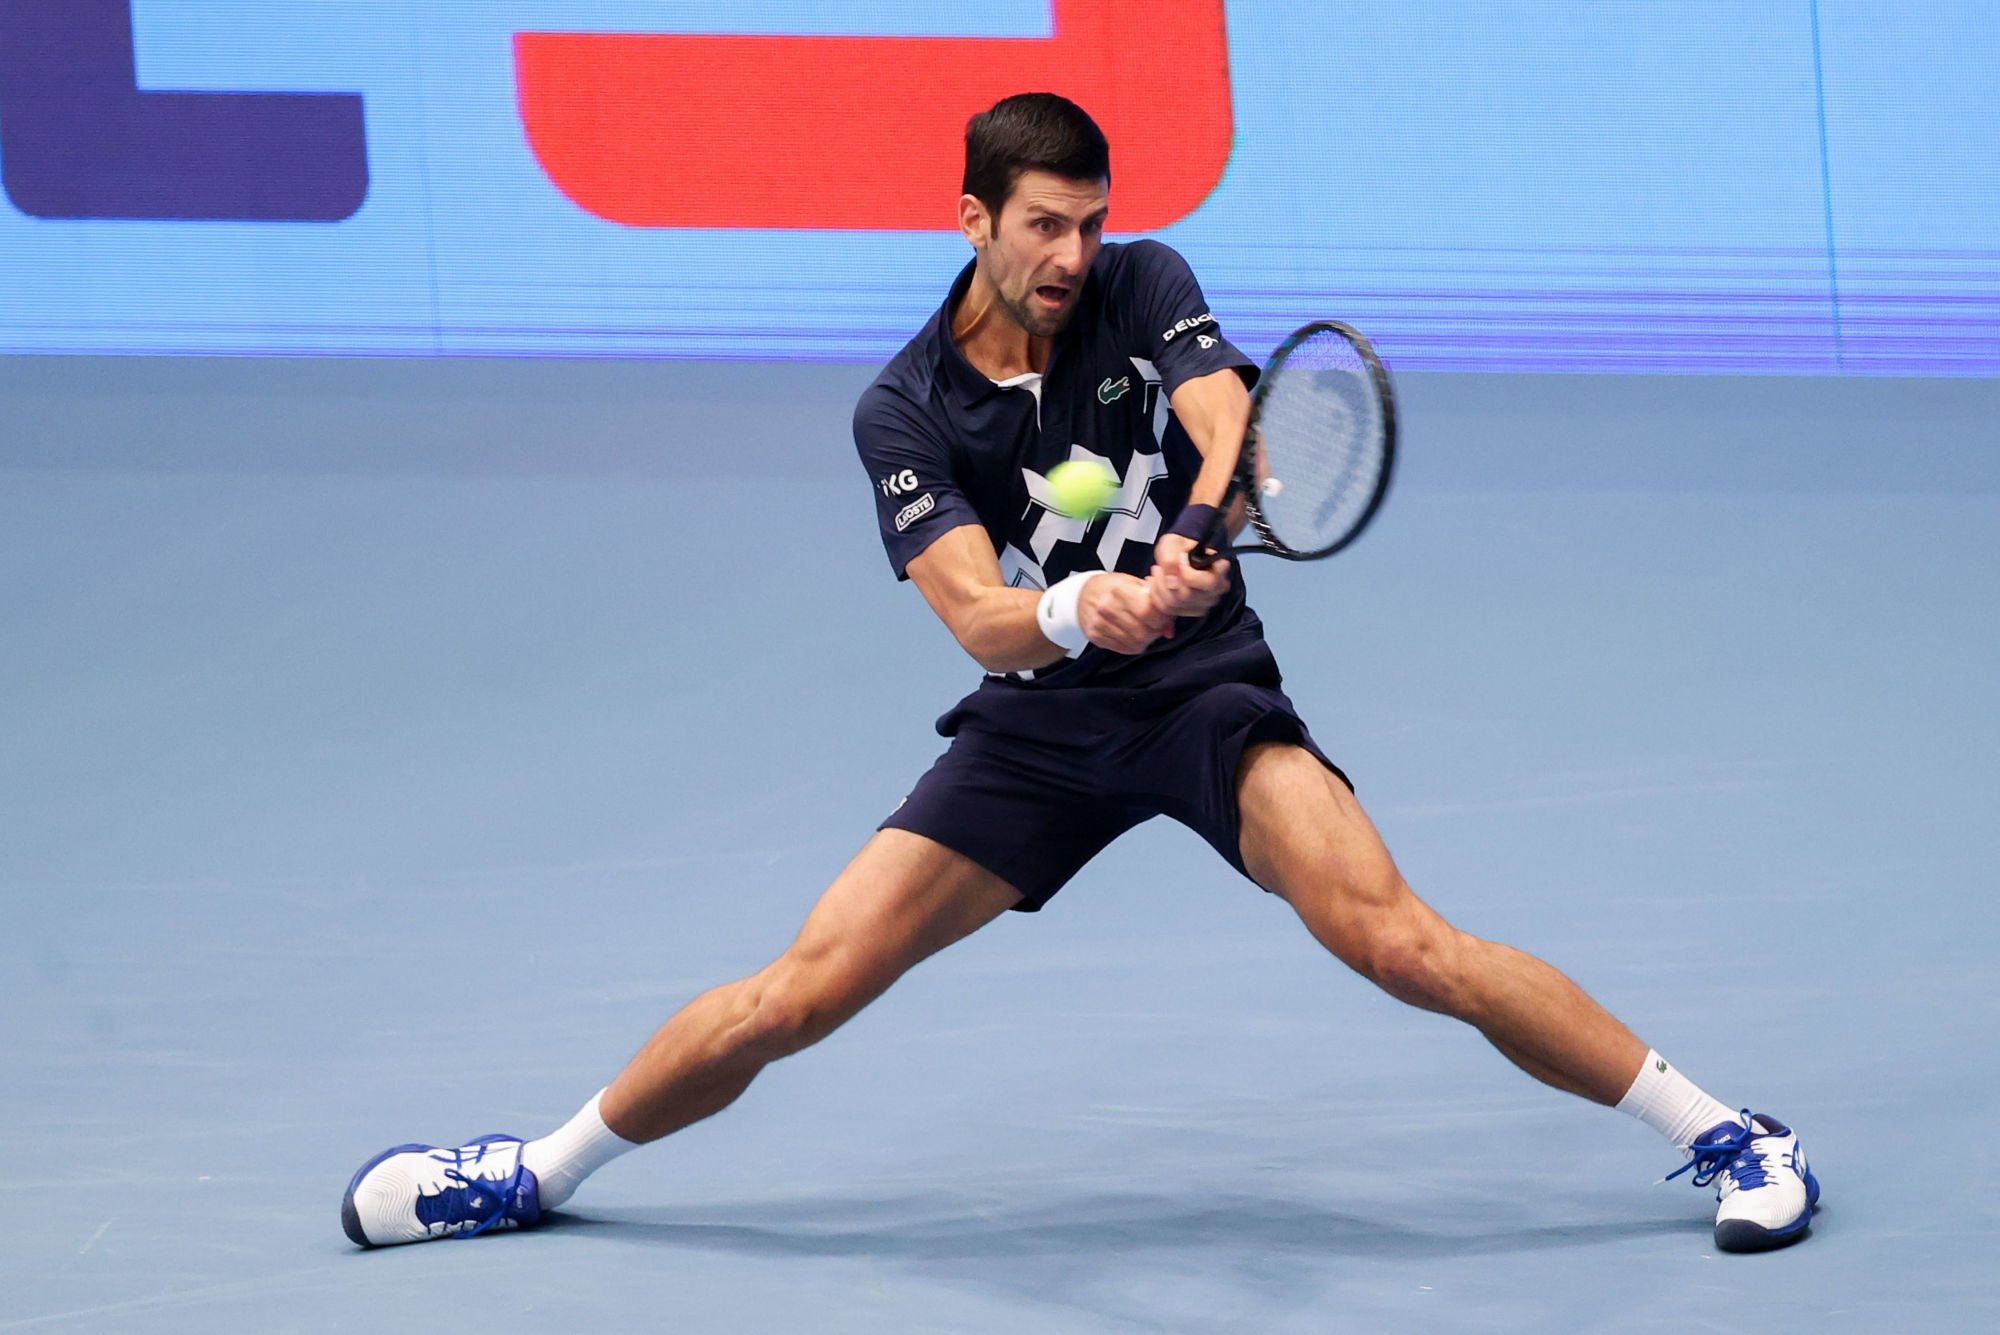 VIENNA,AUSTRIA,27.OCT.20 - TENNIS - ATP World Tour, Erste Bank Open. Image shows Novak Djokovic (SRB). Photo: GEPA pictures/ Christian Walgram 
By Icon Sport - Vienne (Autriche)